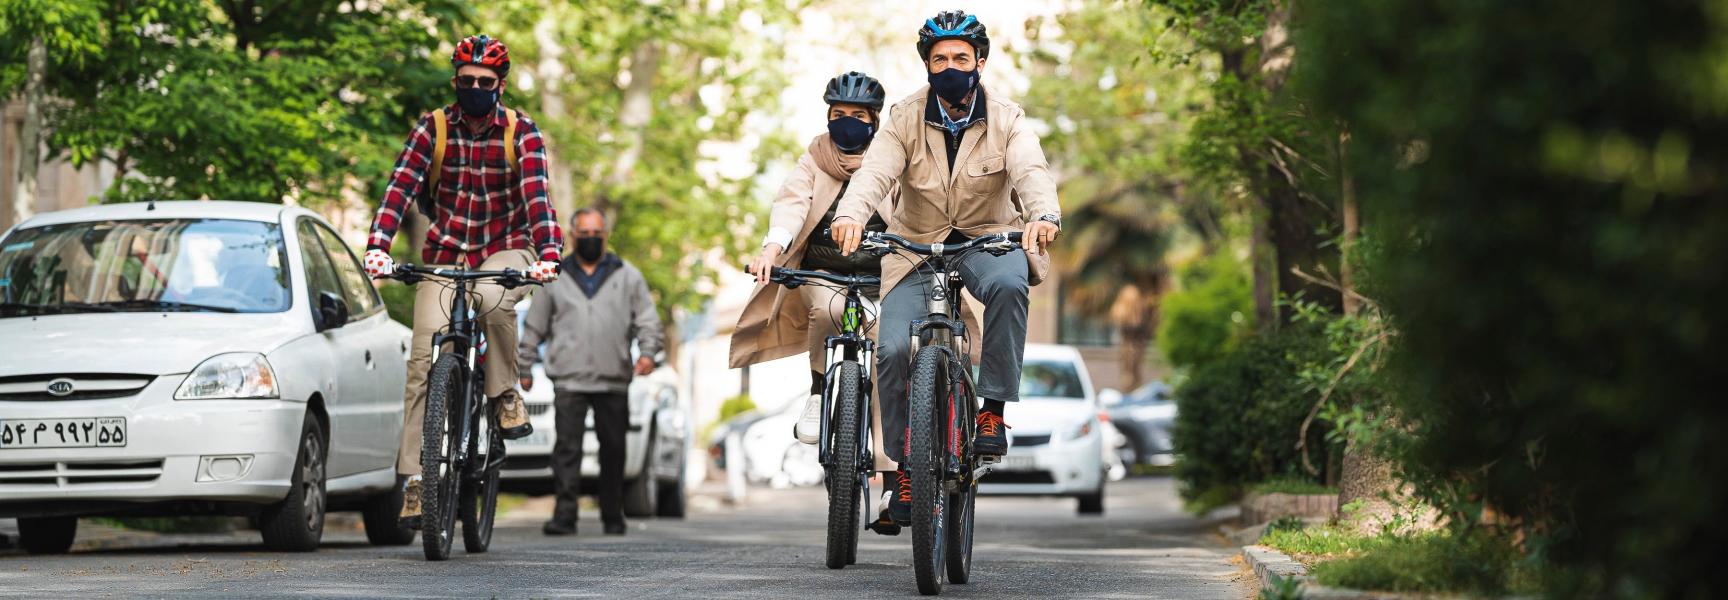 Men riding bikes in Iran